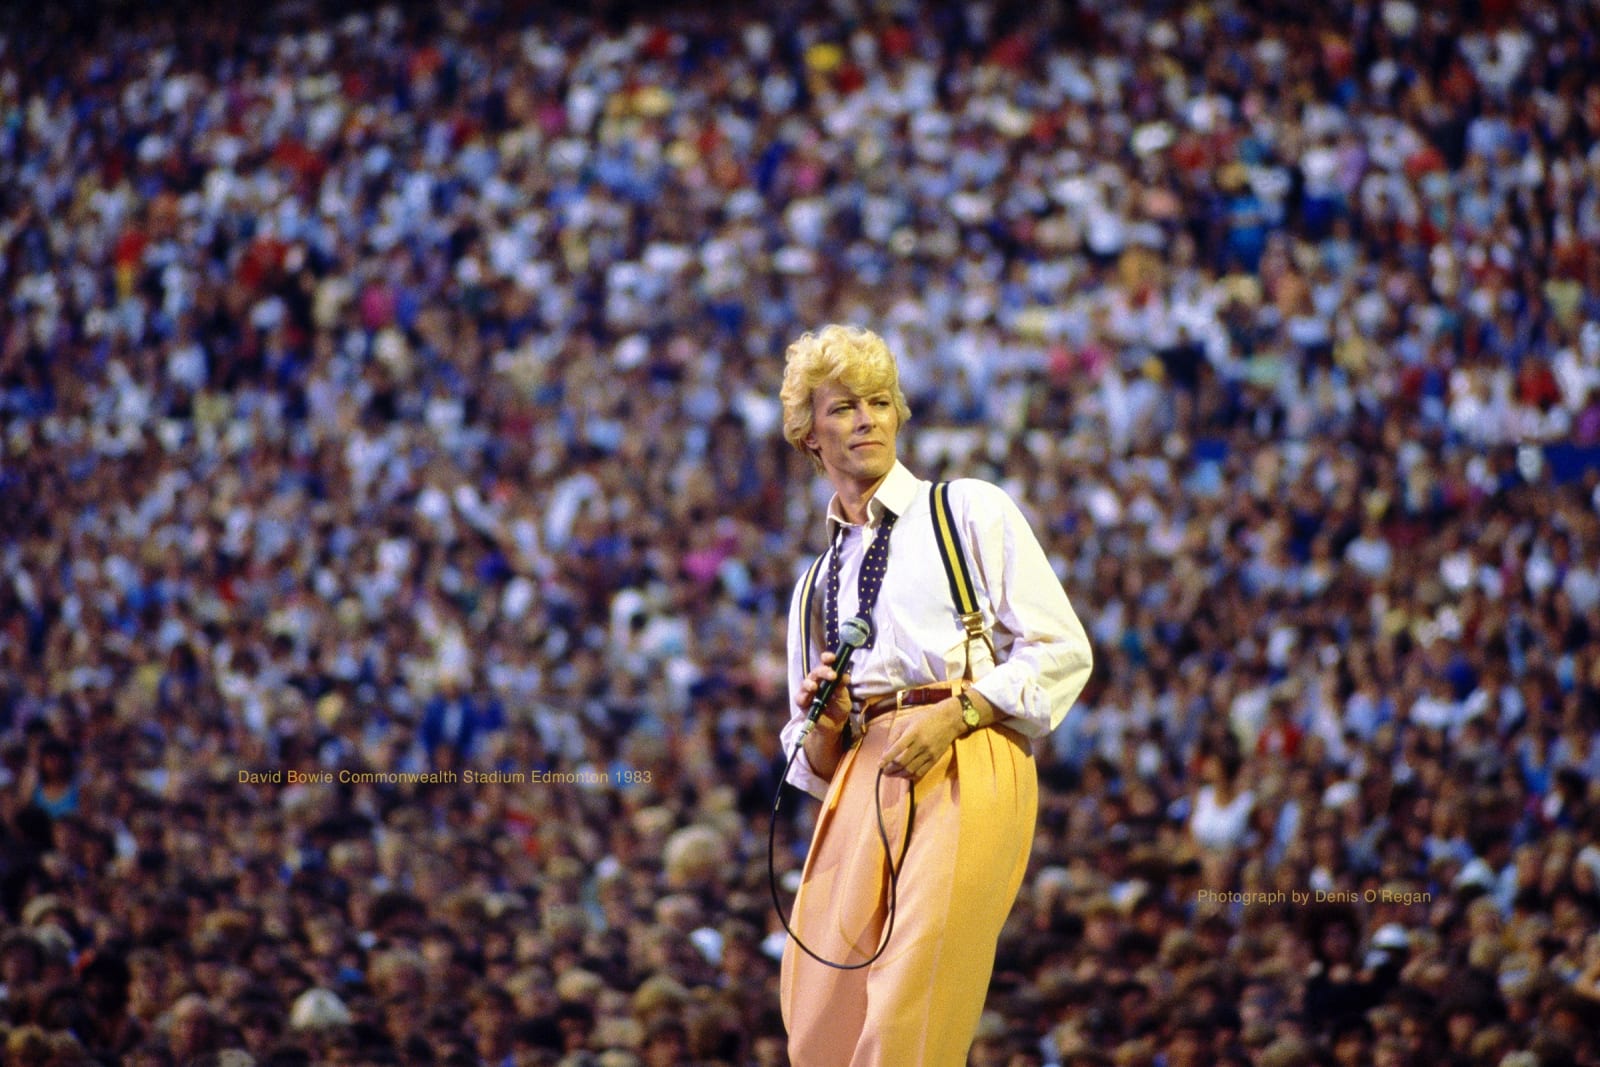 DAVID BOWIE, David Bowie Edmonton, 1983